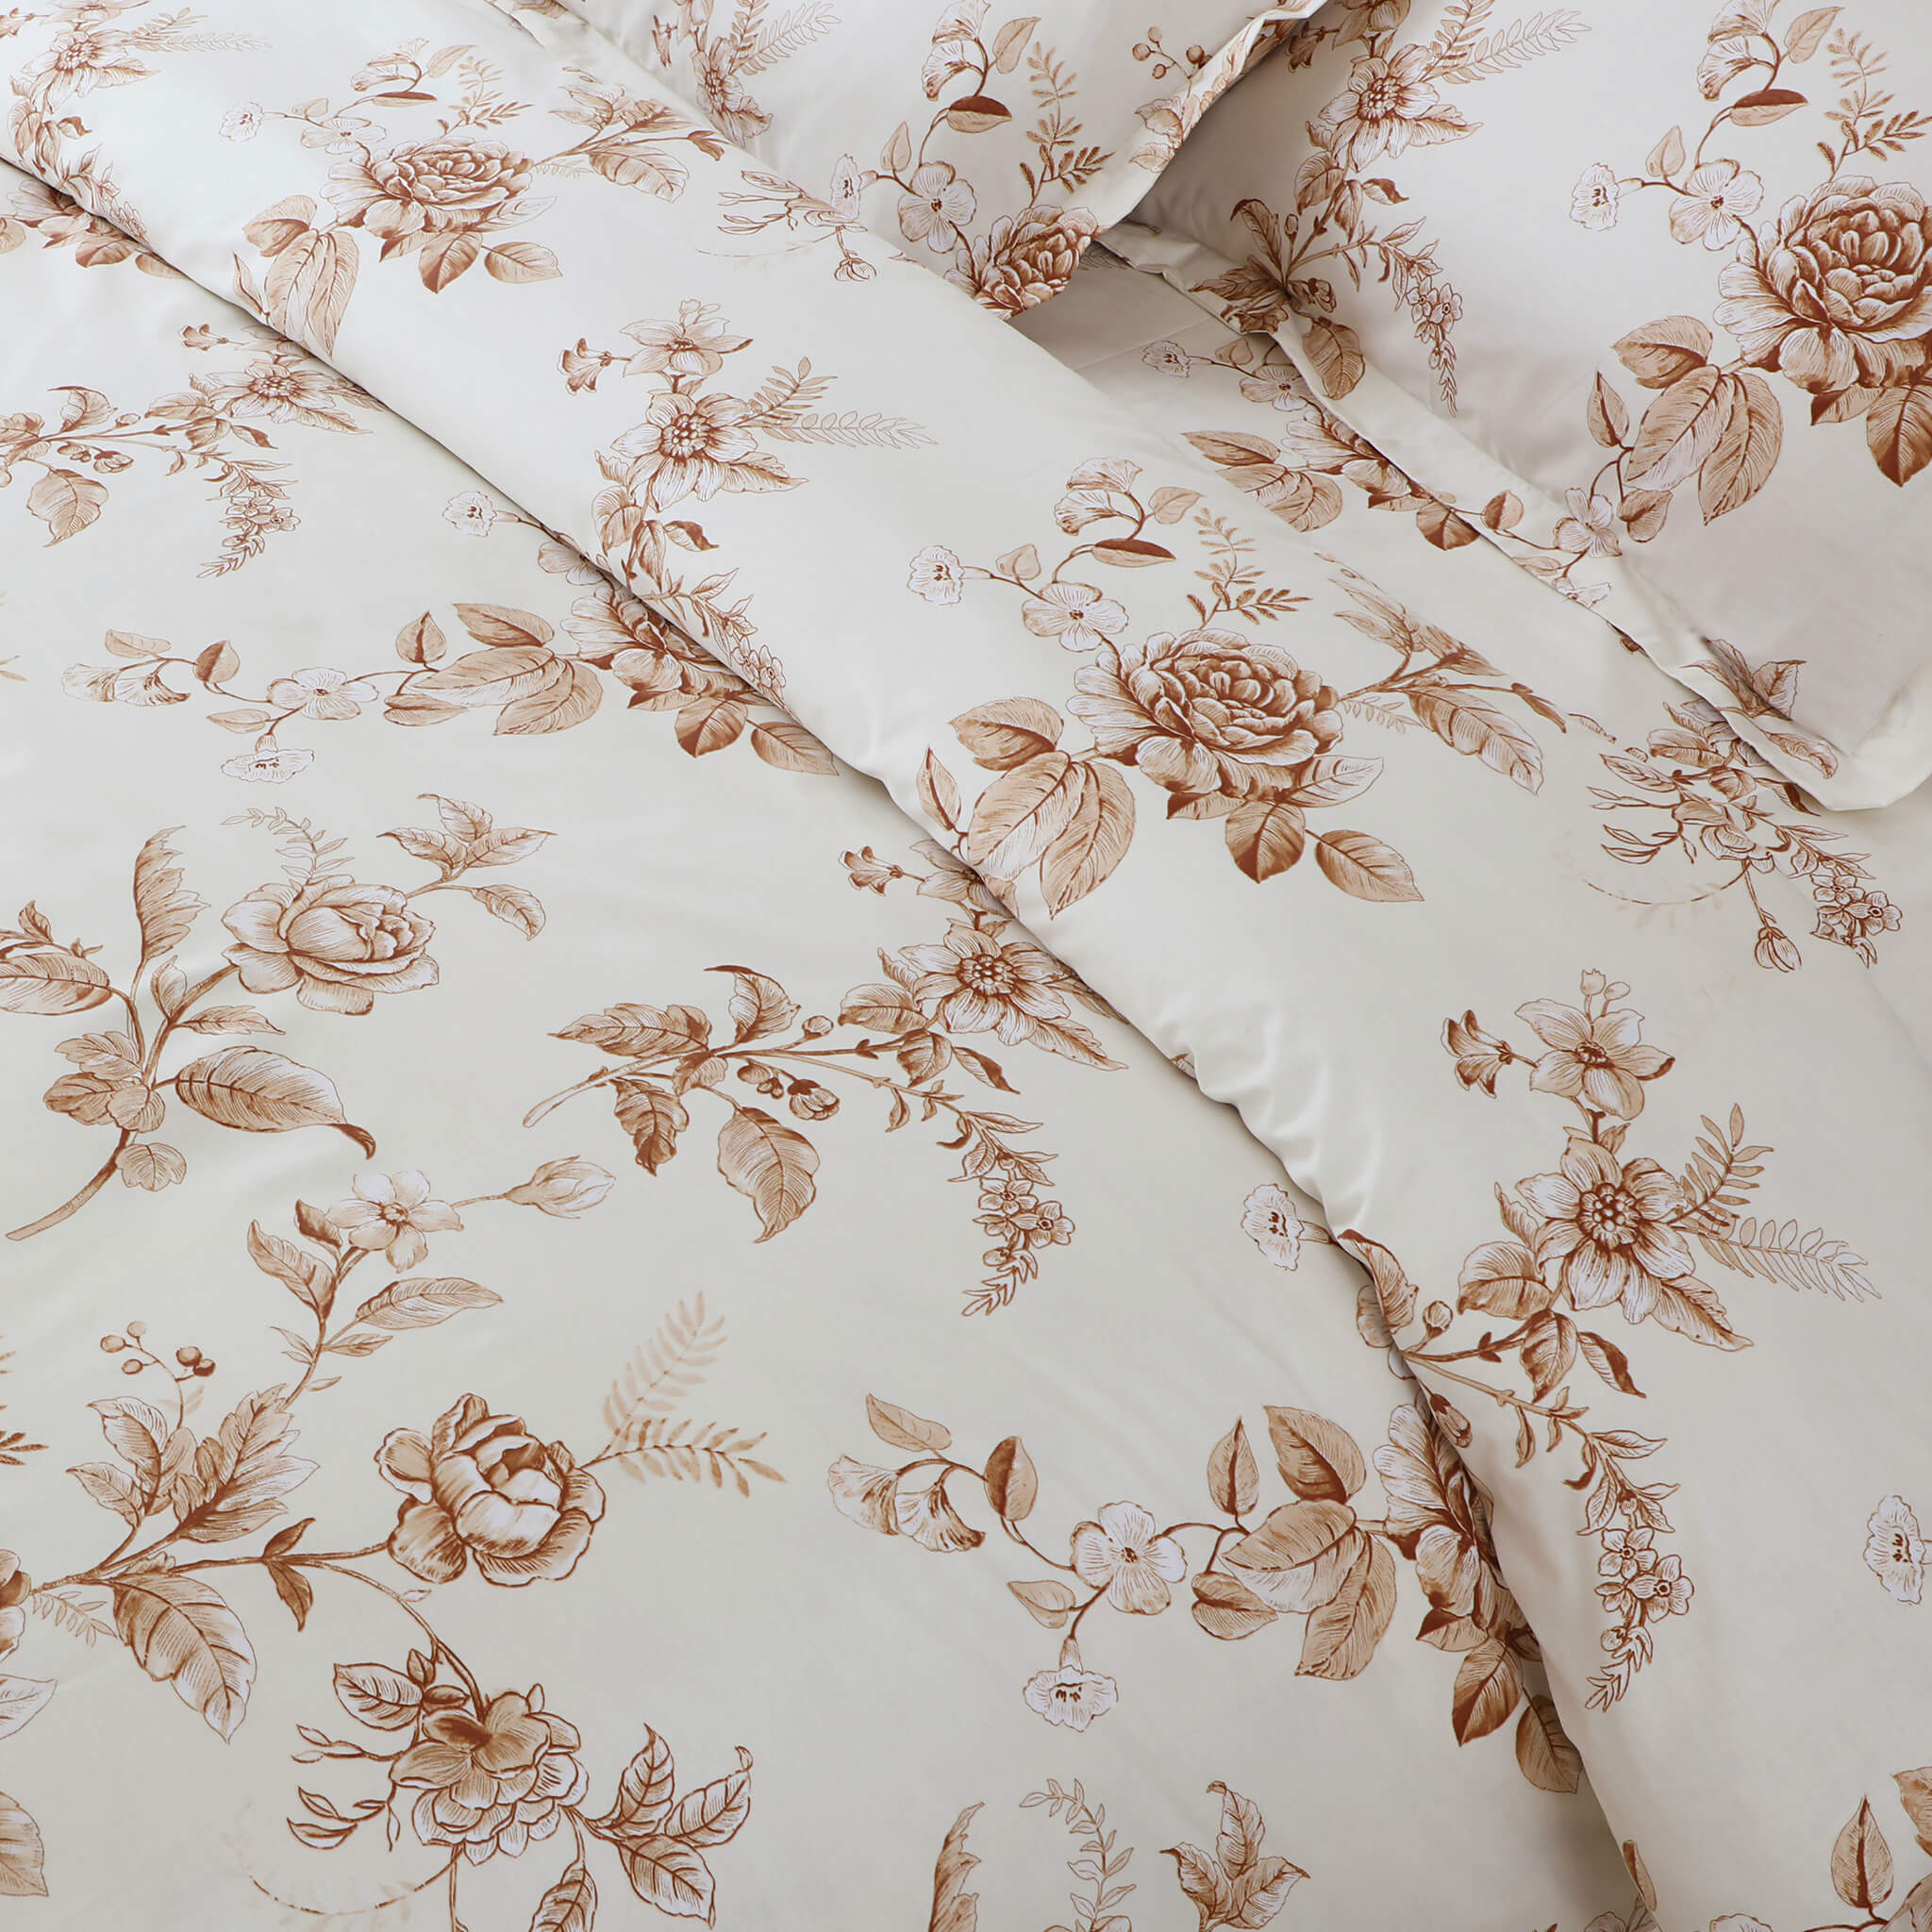 Malako Royale XL White Botanic 100% Cotton King Size Bed Sheet/Bedding Set - MALAKO